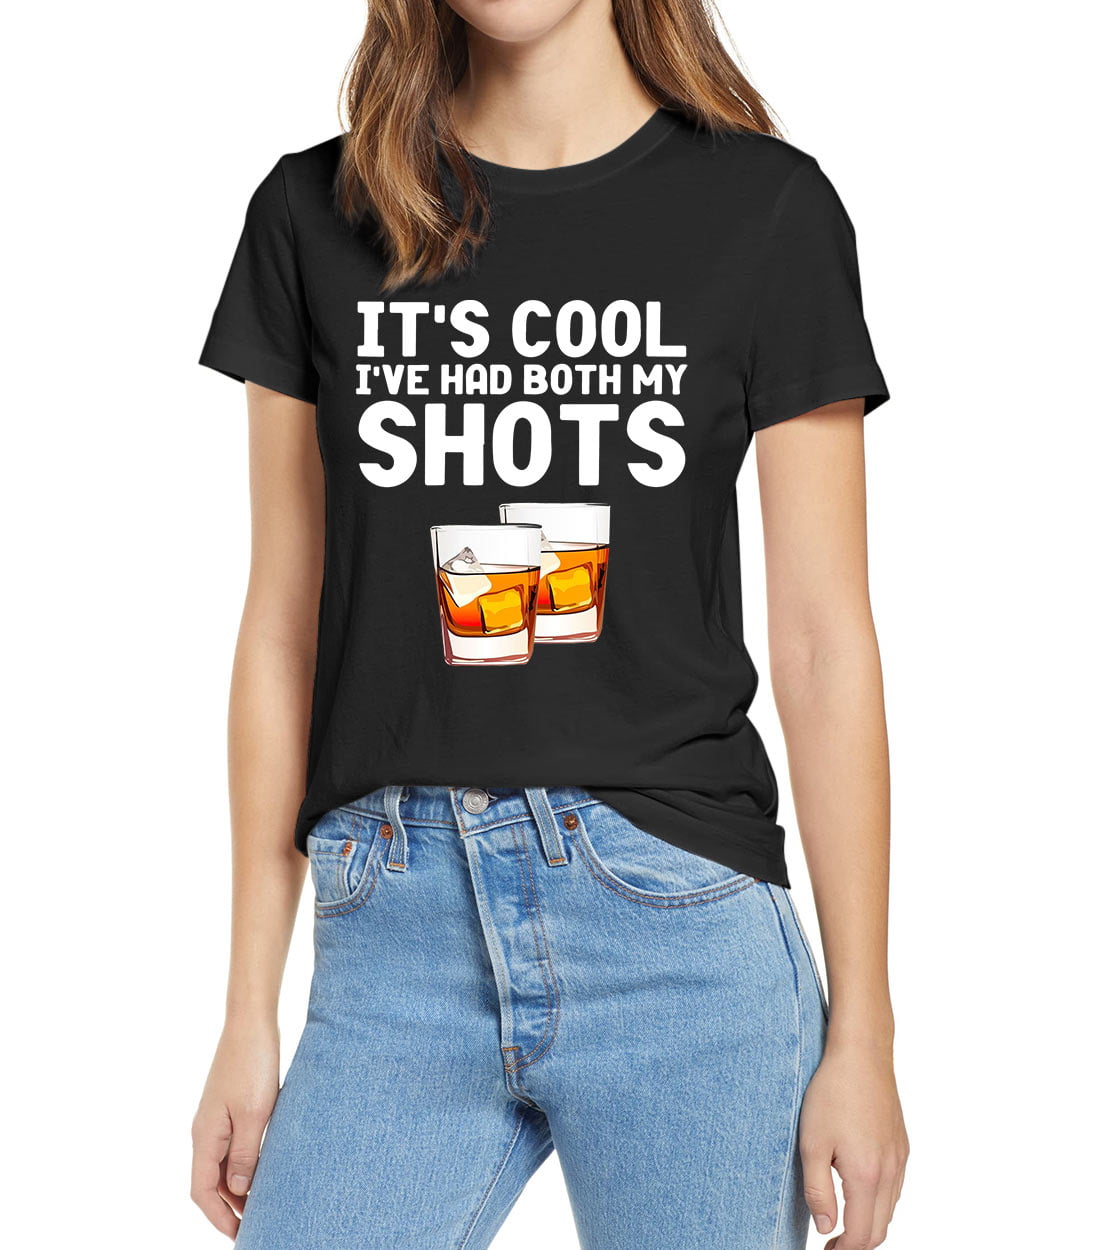 It's cool I've had both my shots whiskey shirt